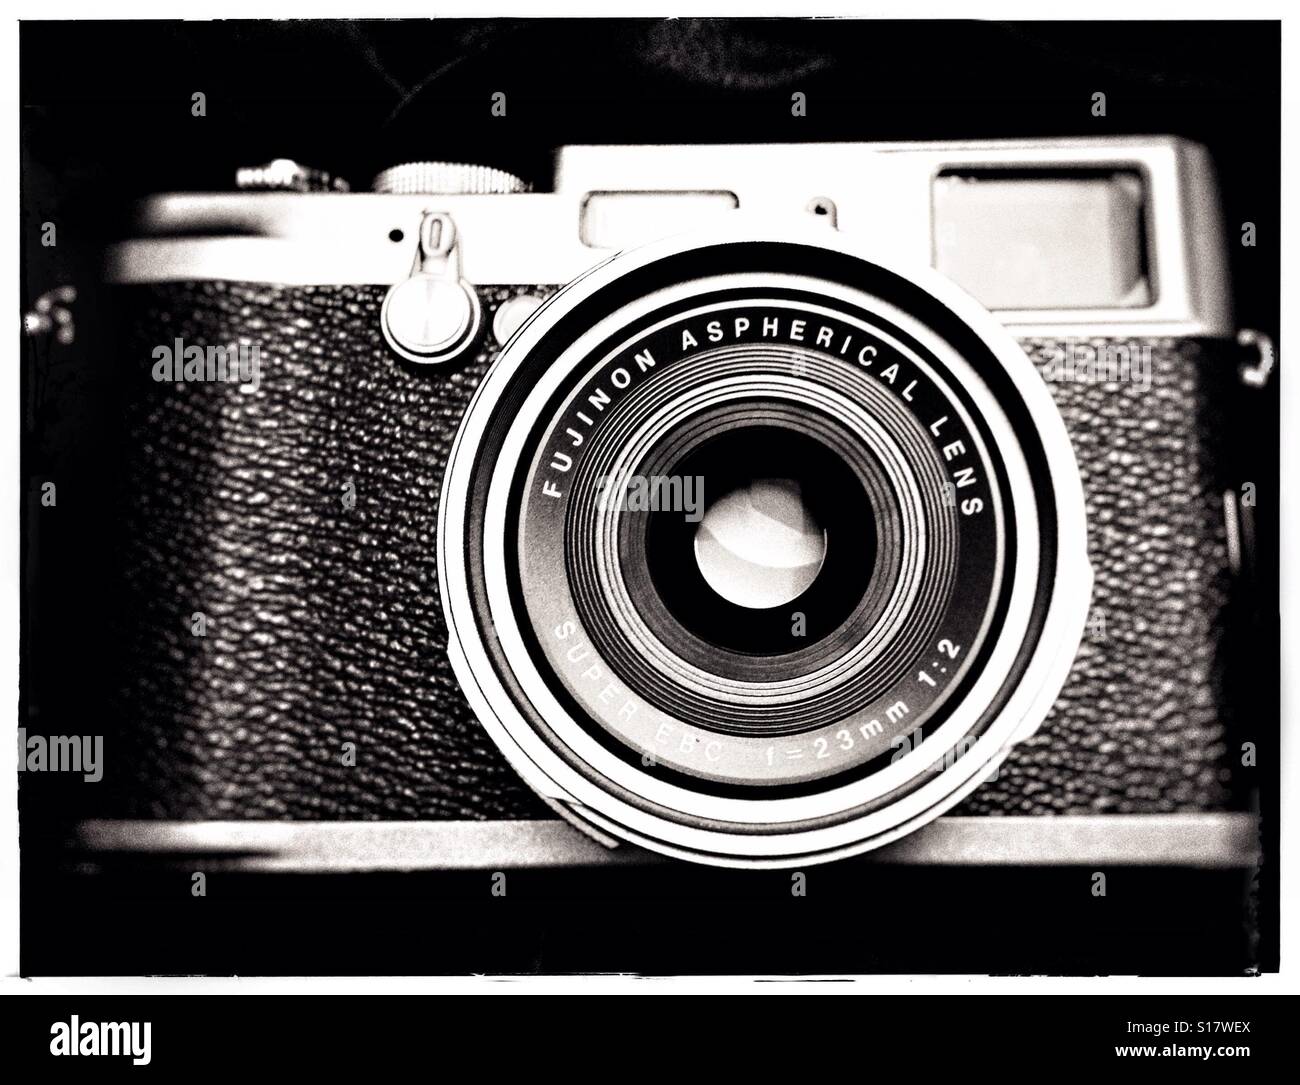 Fuji X100 fotocamera digitale Foto Stock